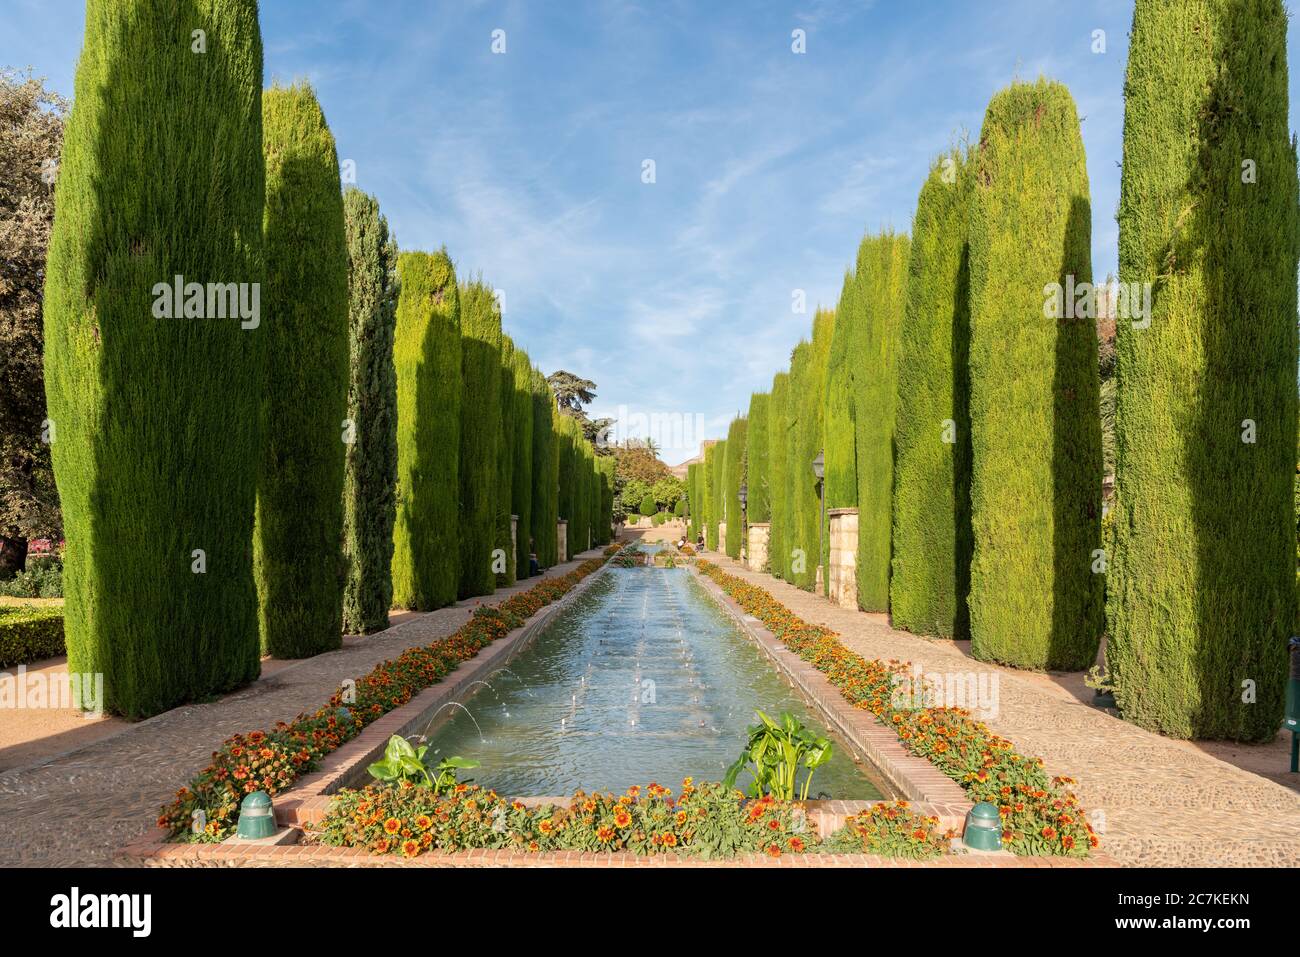 Hohe Zypressen säumen die Teiche der Promenade der Könige in den Jardines del Alcázar im historischen Alcázar de los Reyes Cristianos in Córdoba Stockfoto